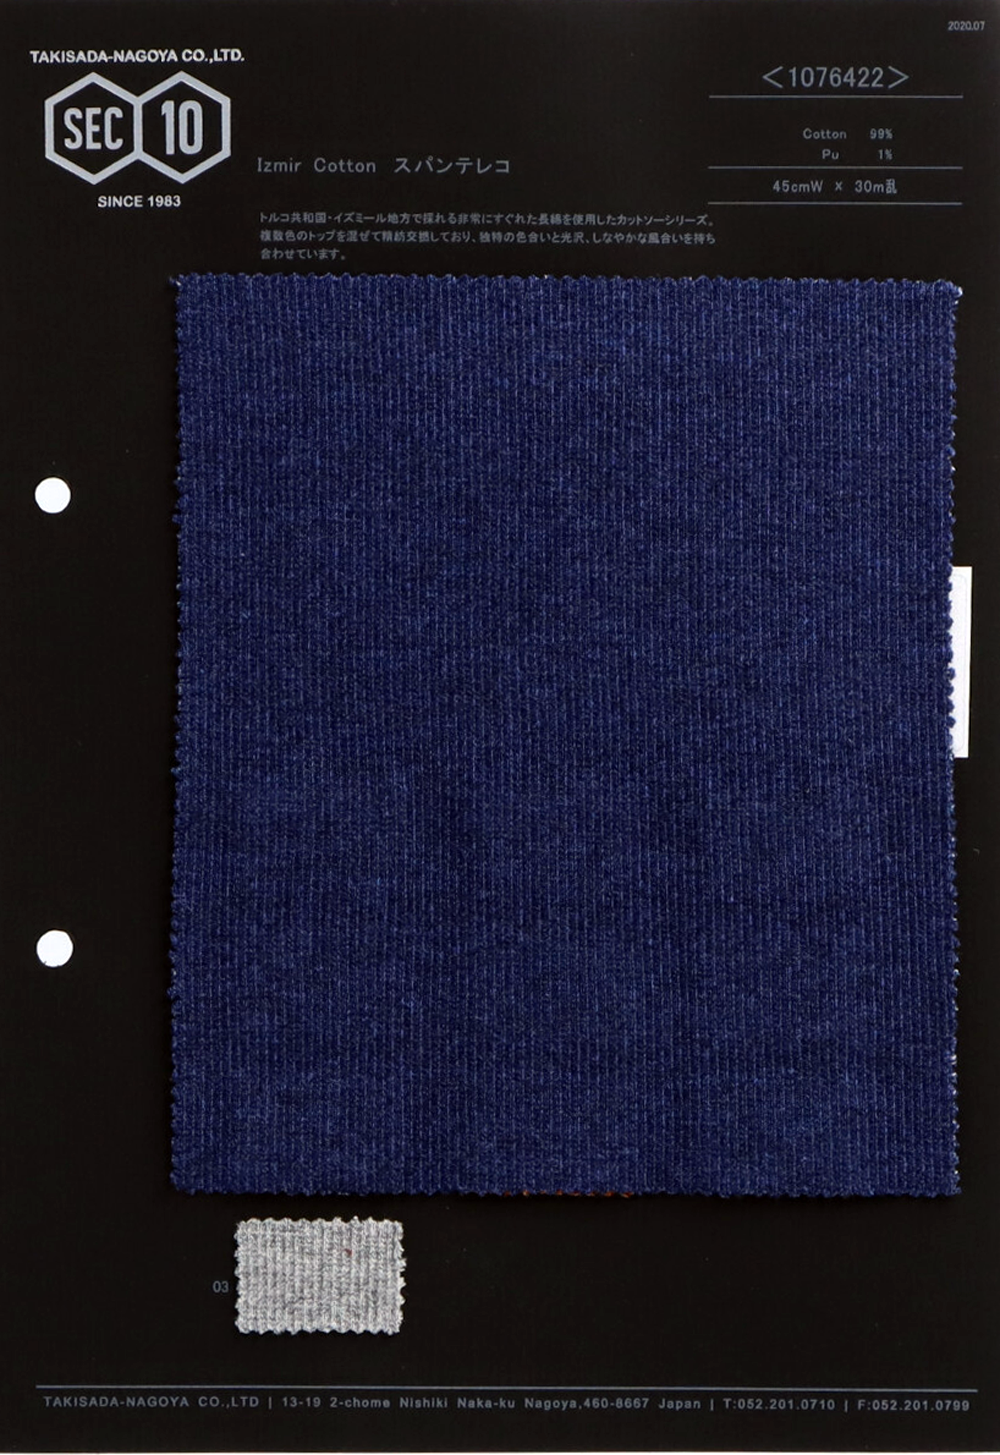 1076422 Izmir Cotton Span Teleco[Fabrication De Textile] Takisada Nagoya